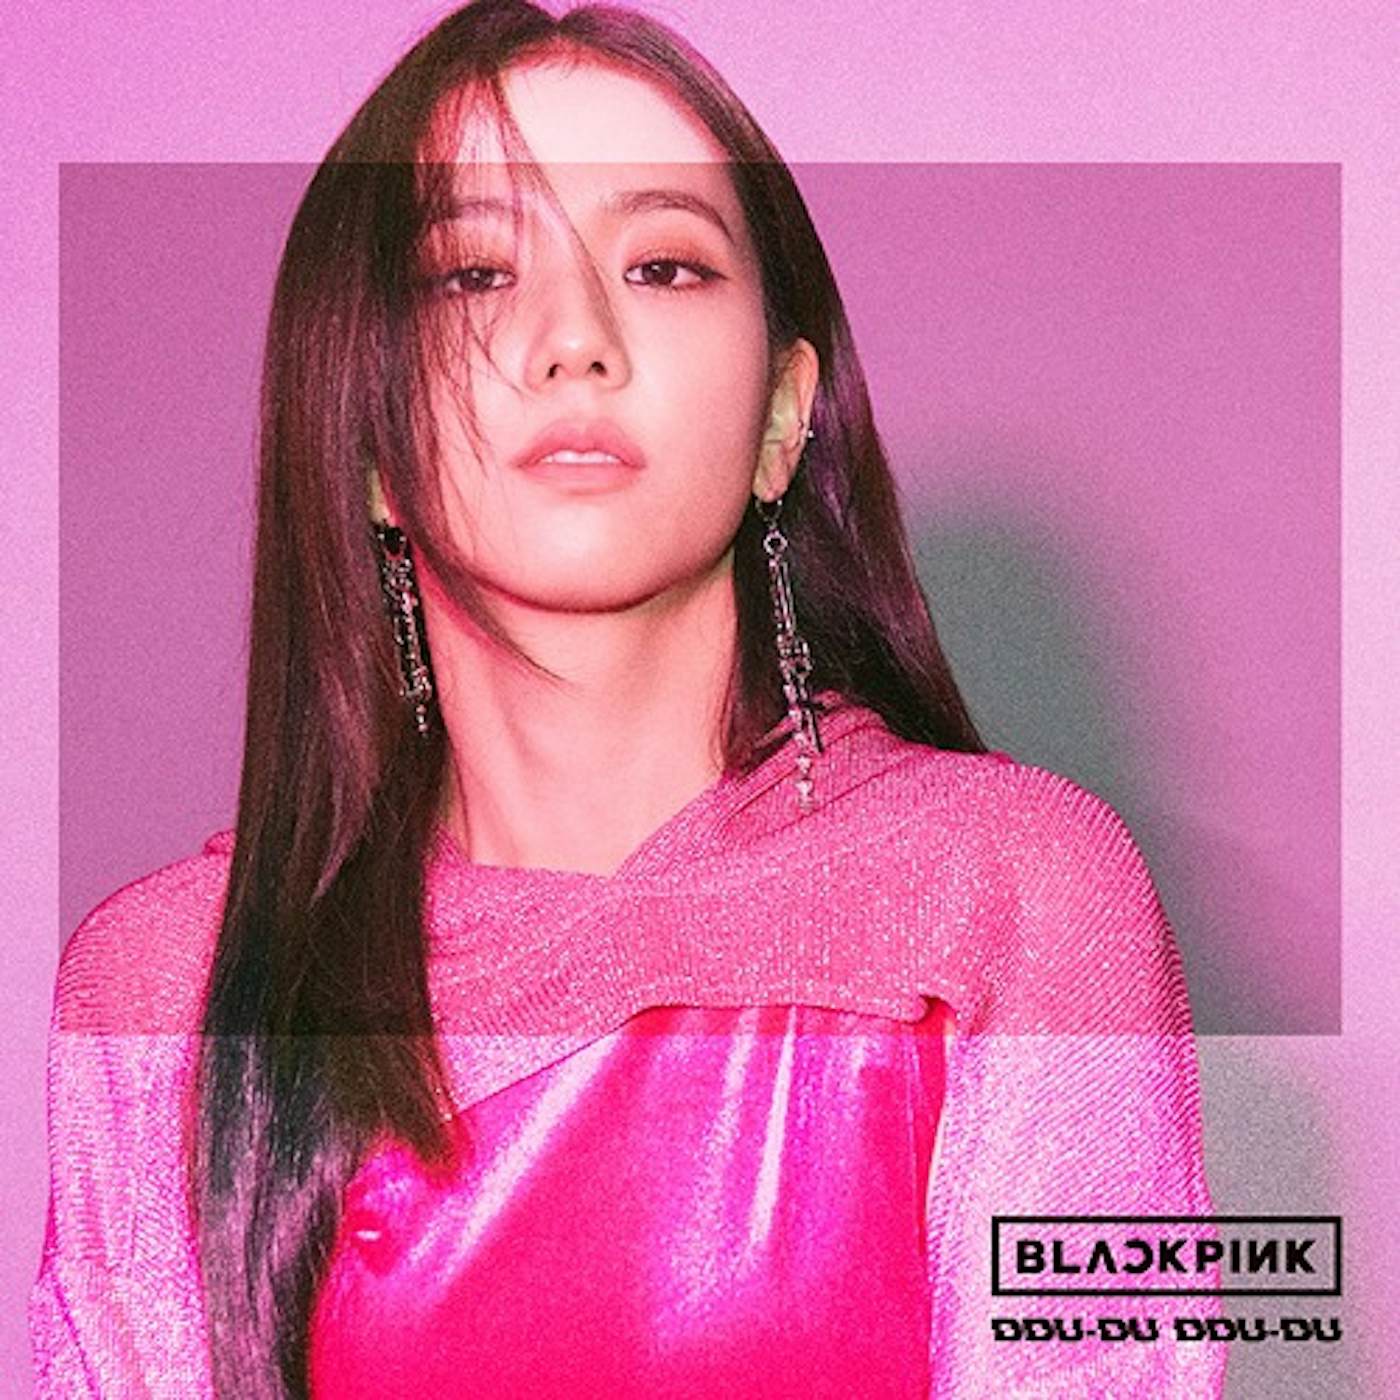 Blackpink - Born Pink - Digipack C - Jisoo